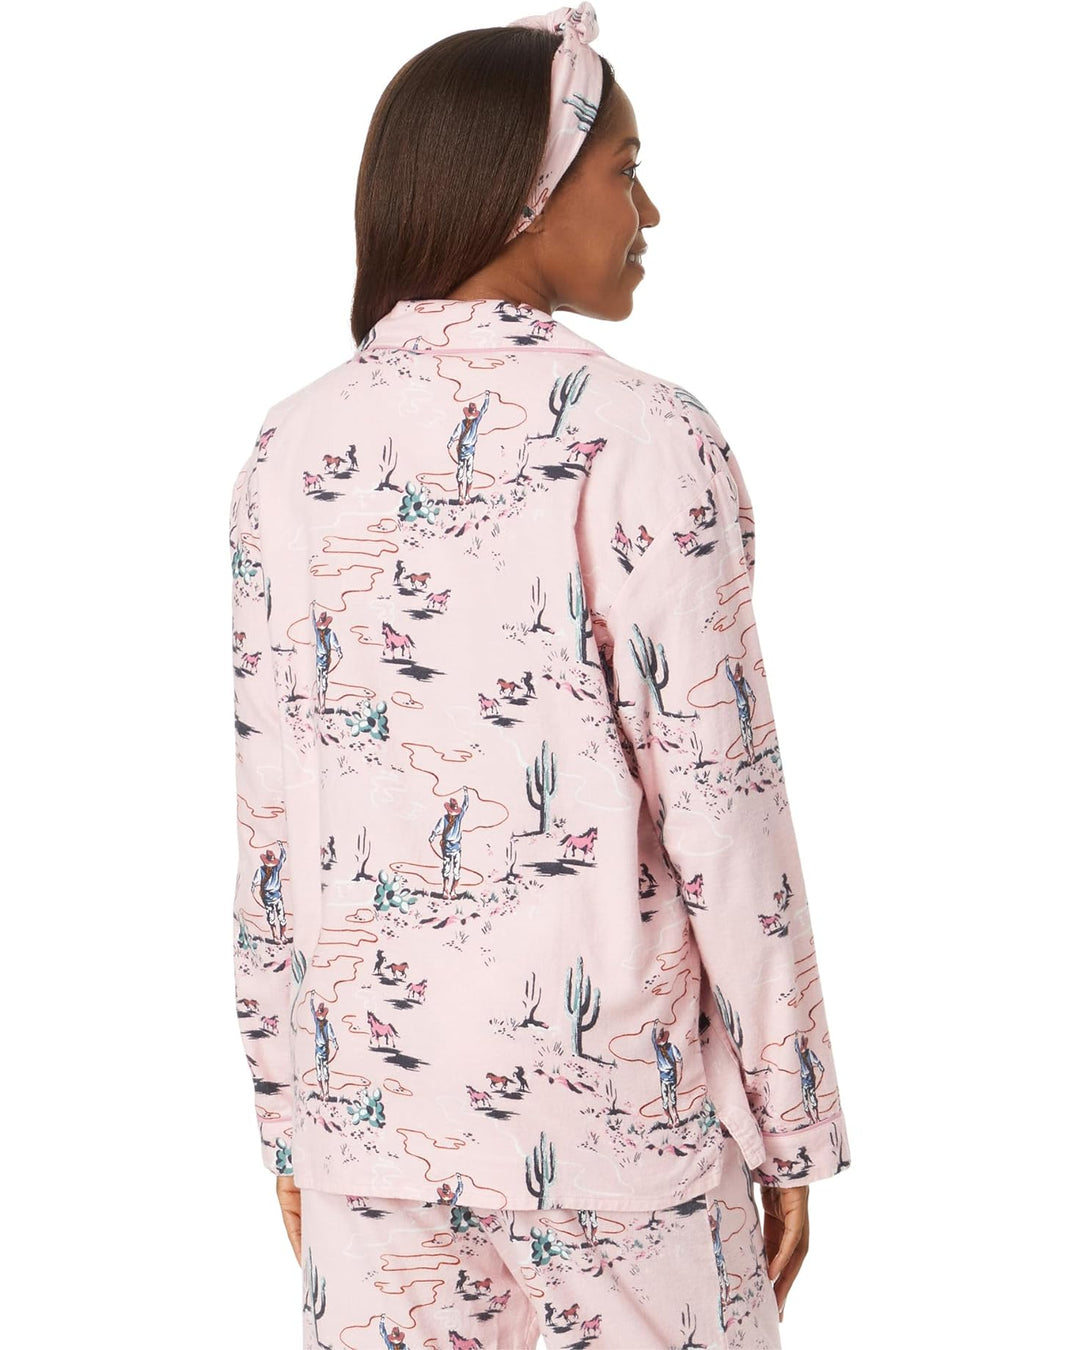 Flannel PJ Set - Cowgirl in Pink Mist